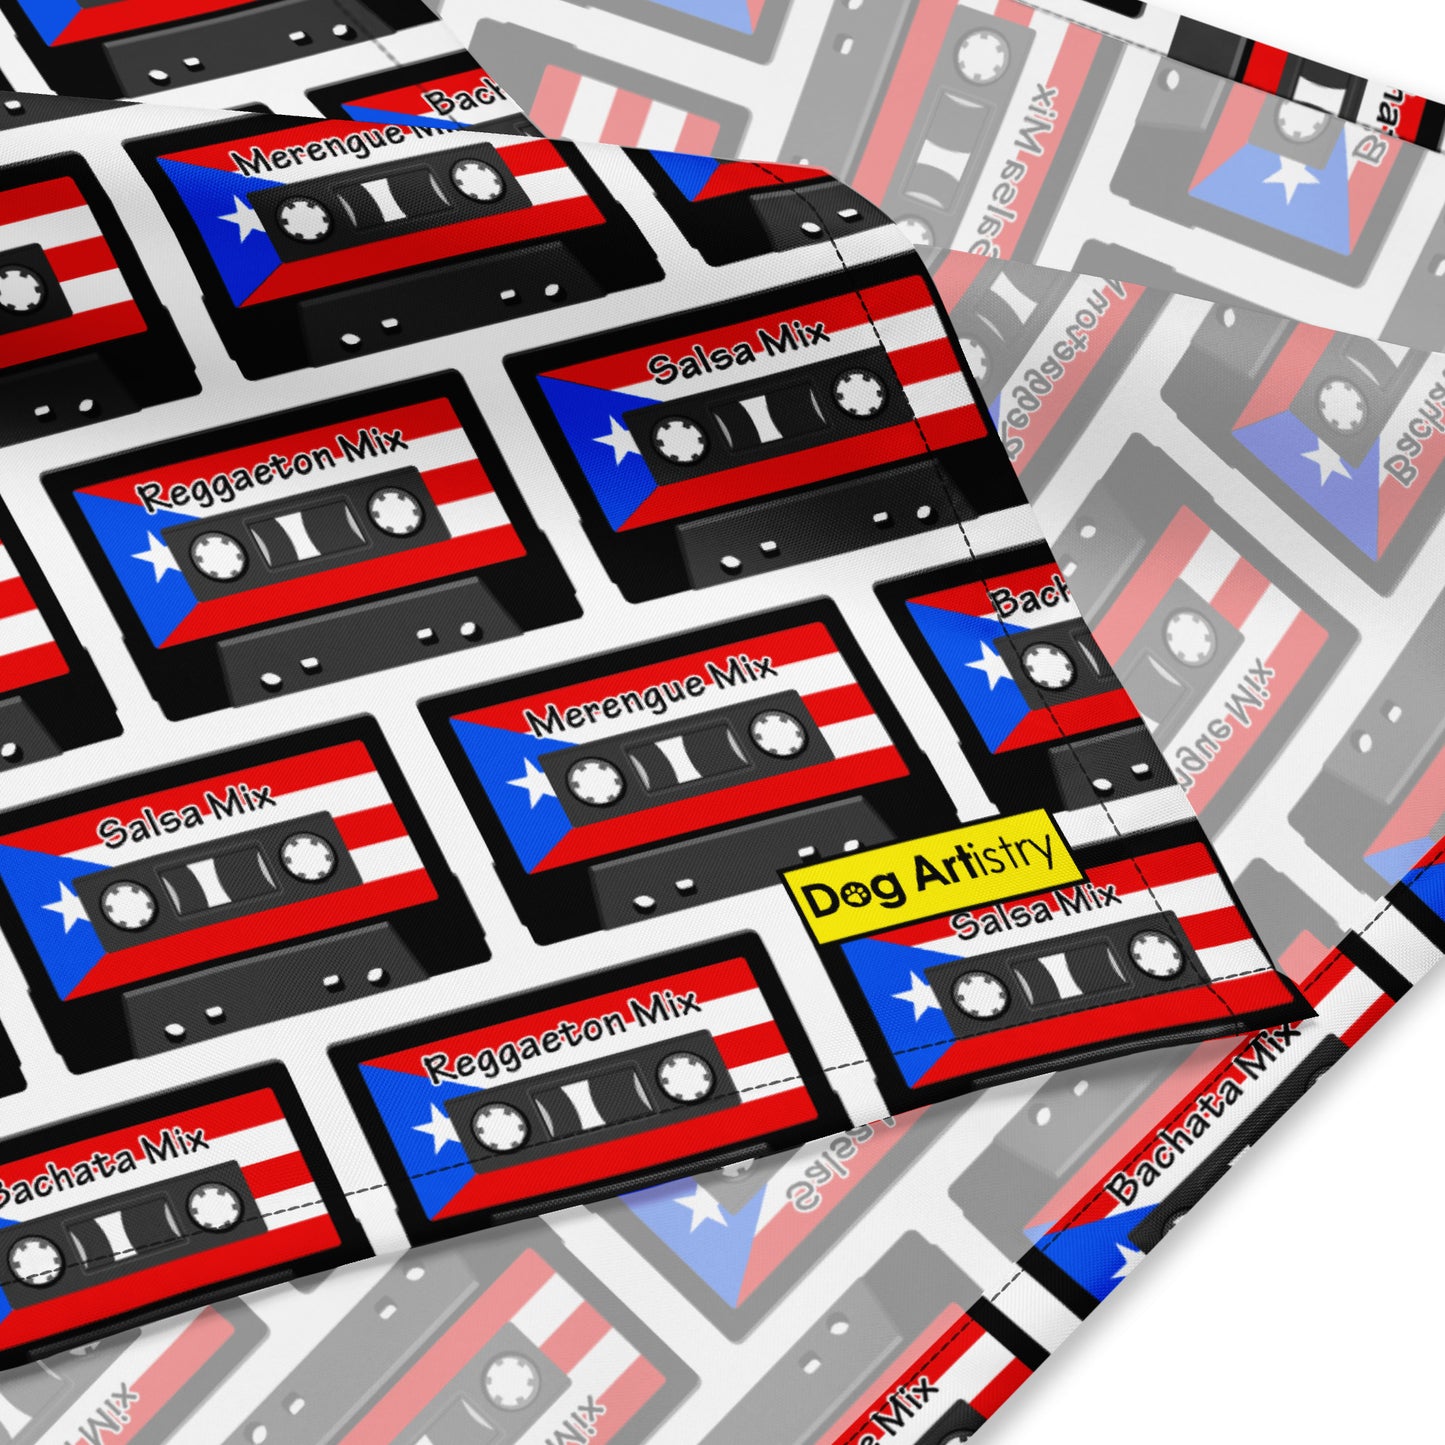 Reggaeton, Salsa, Merengue, Bachata music cassette tape with Puerto Rican flag bandana designed by Dog Artistry.